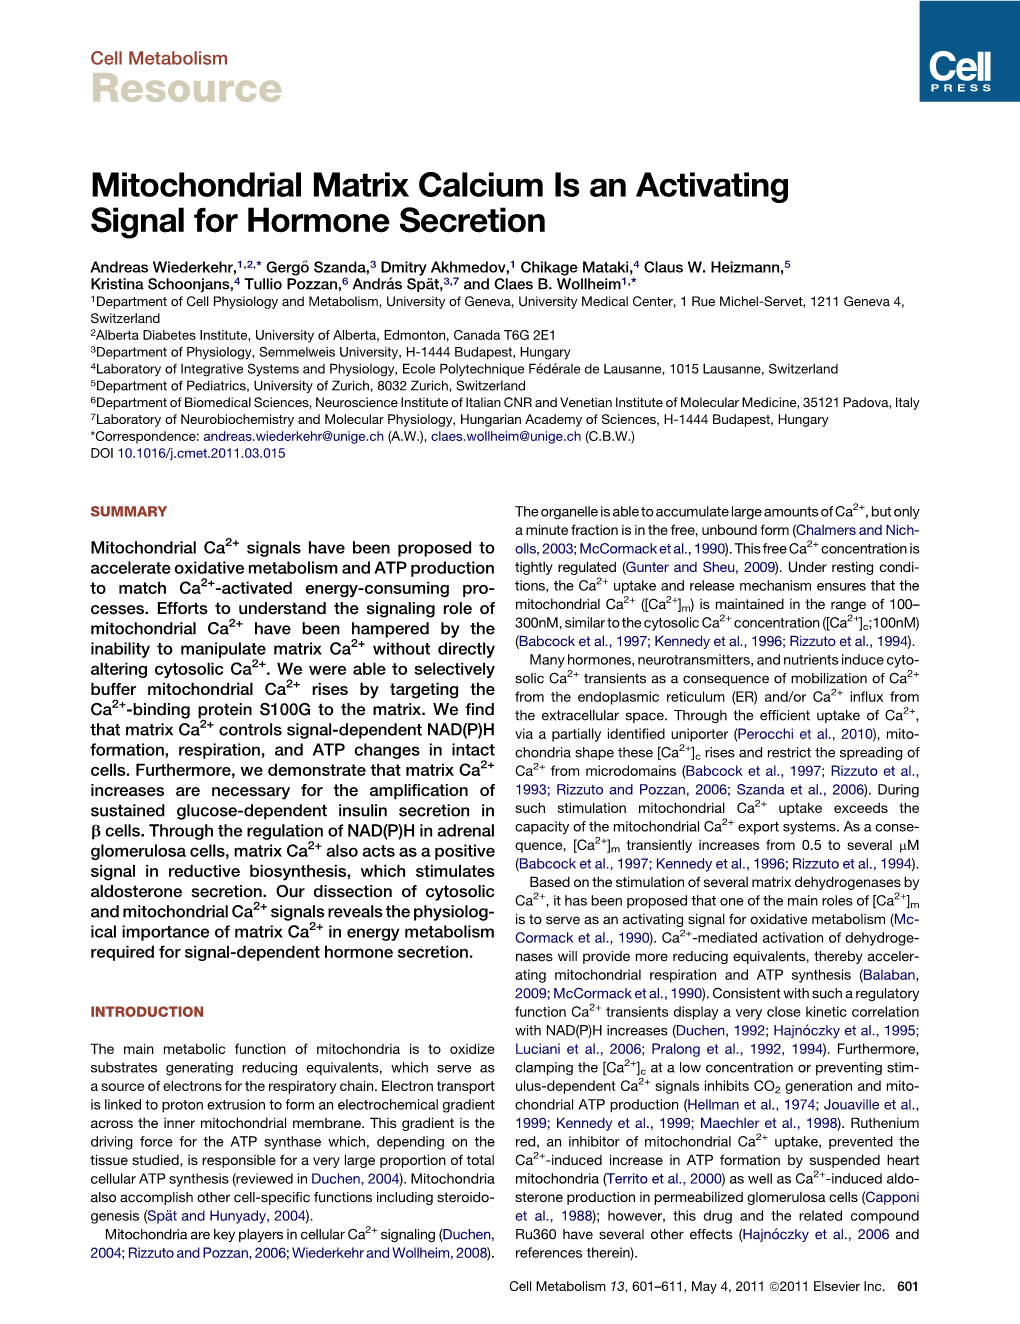 Mitochondrial Matrix Calcium Is an Activating Signal for Hormone Secretion